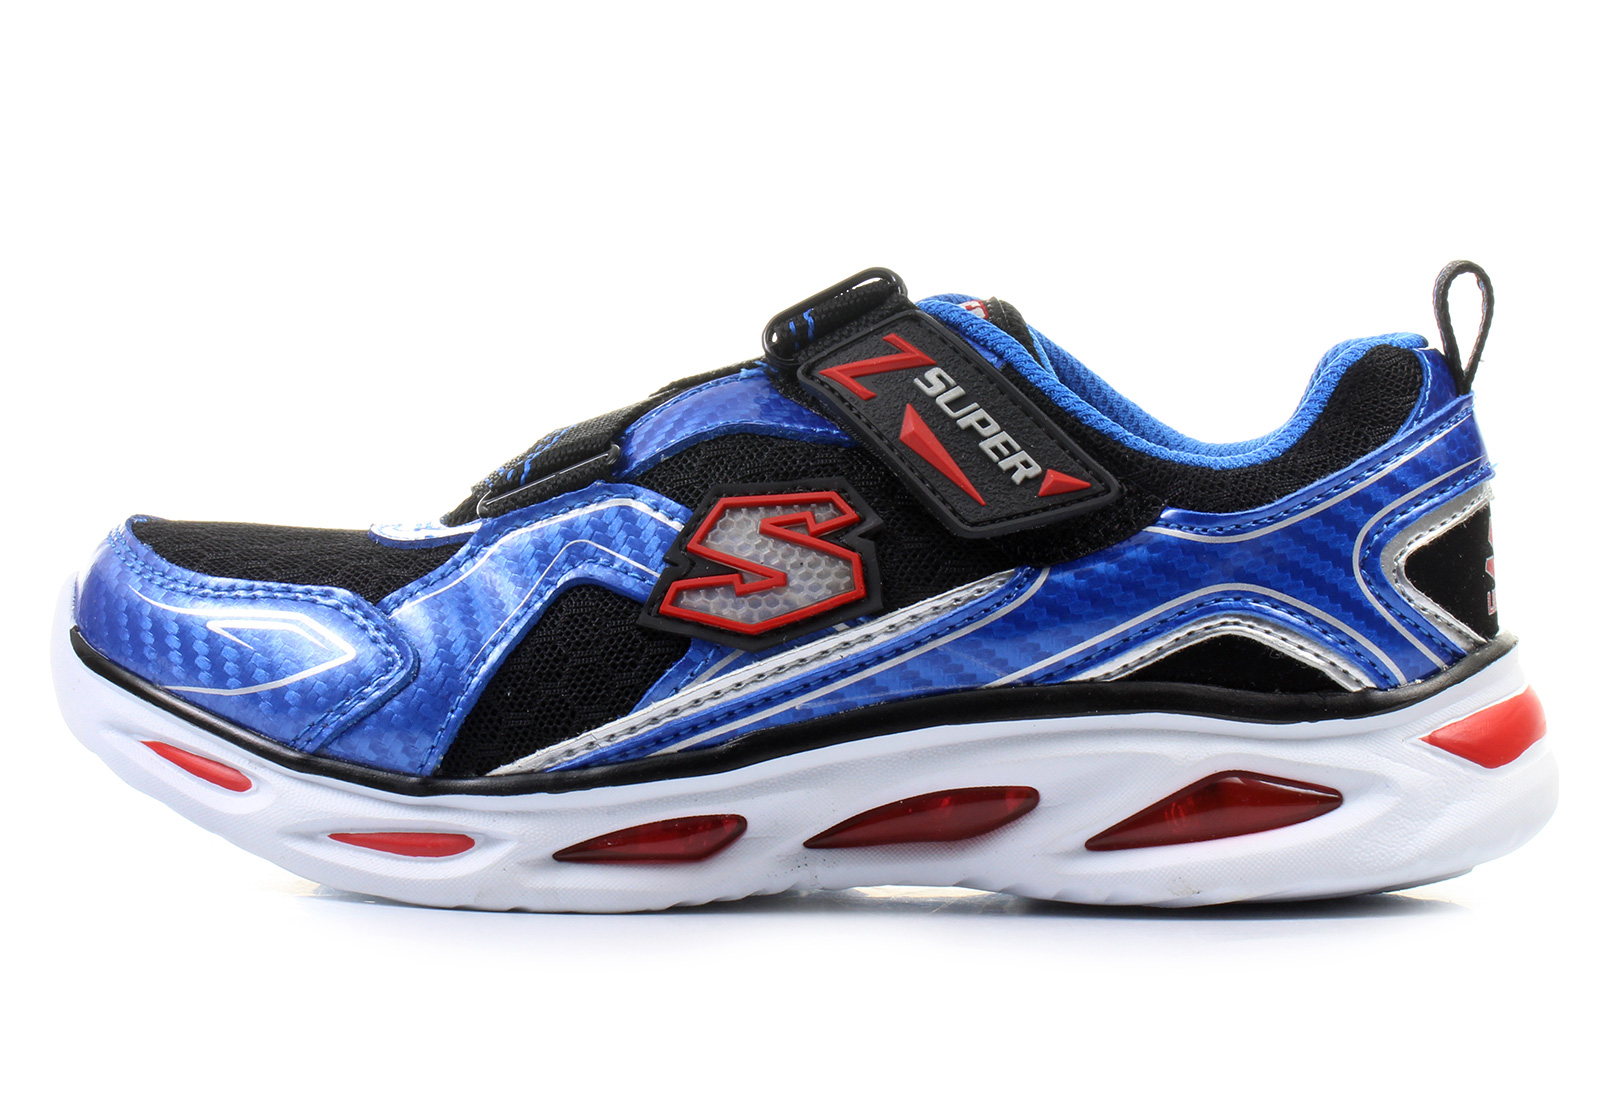 Skechers Shoes - Ipox Light-up - 90385L-BLBK - Online shop for sneakers ...